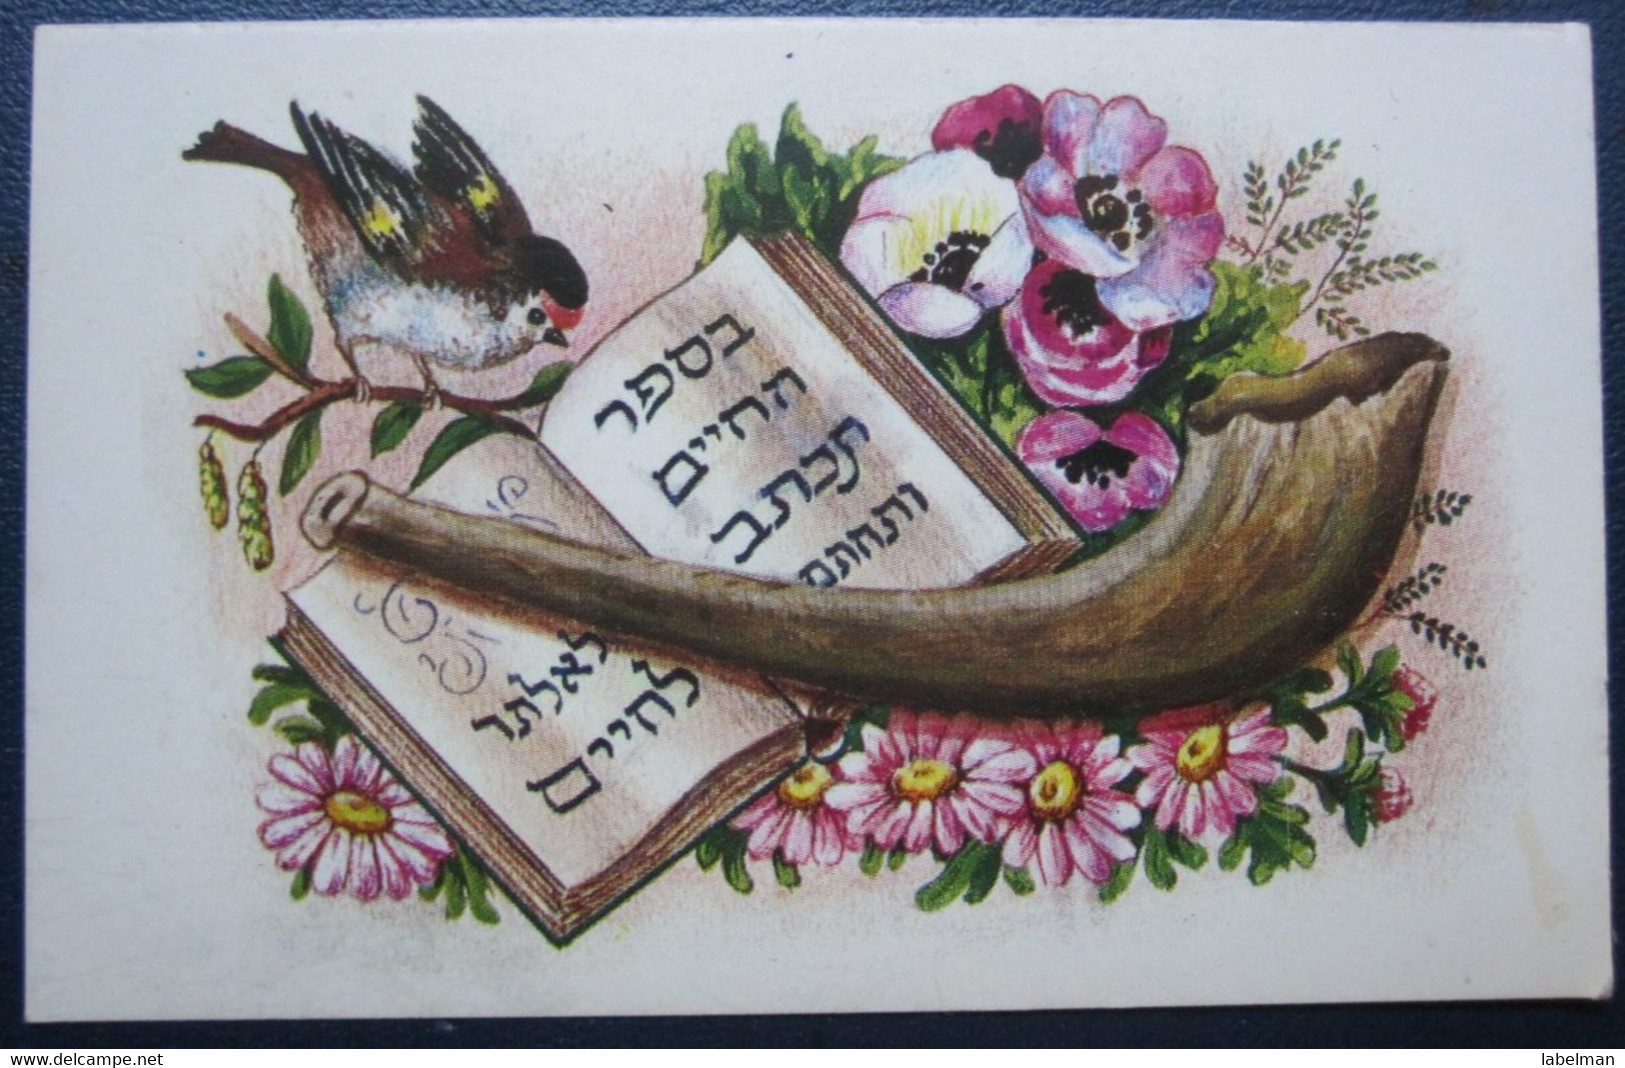 ISRAEL SHANA TOVA NEW YEAR  JUDAICA JUIF JEWISH CARD POSTCARD CARTOLINA ANSICHTSKARTE - Nouvel An